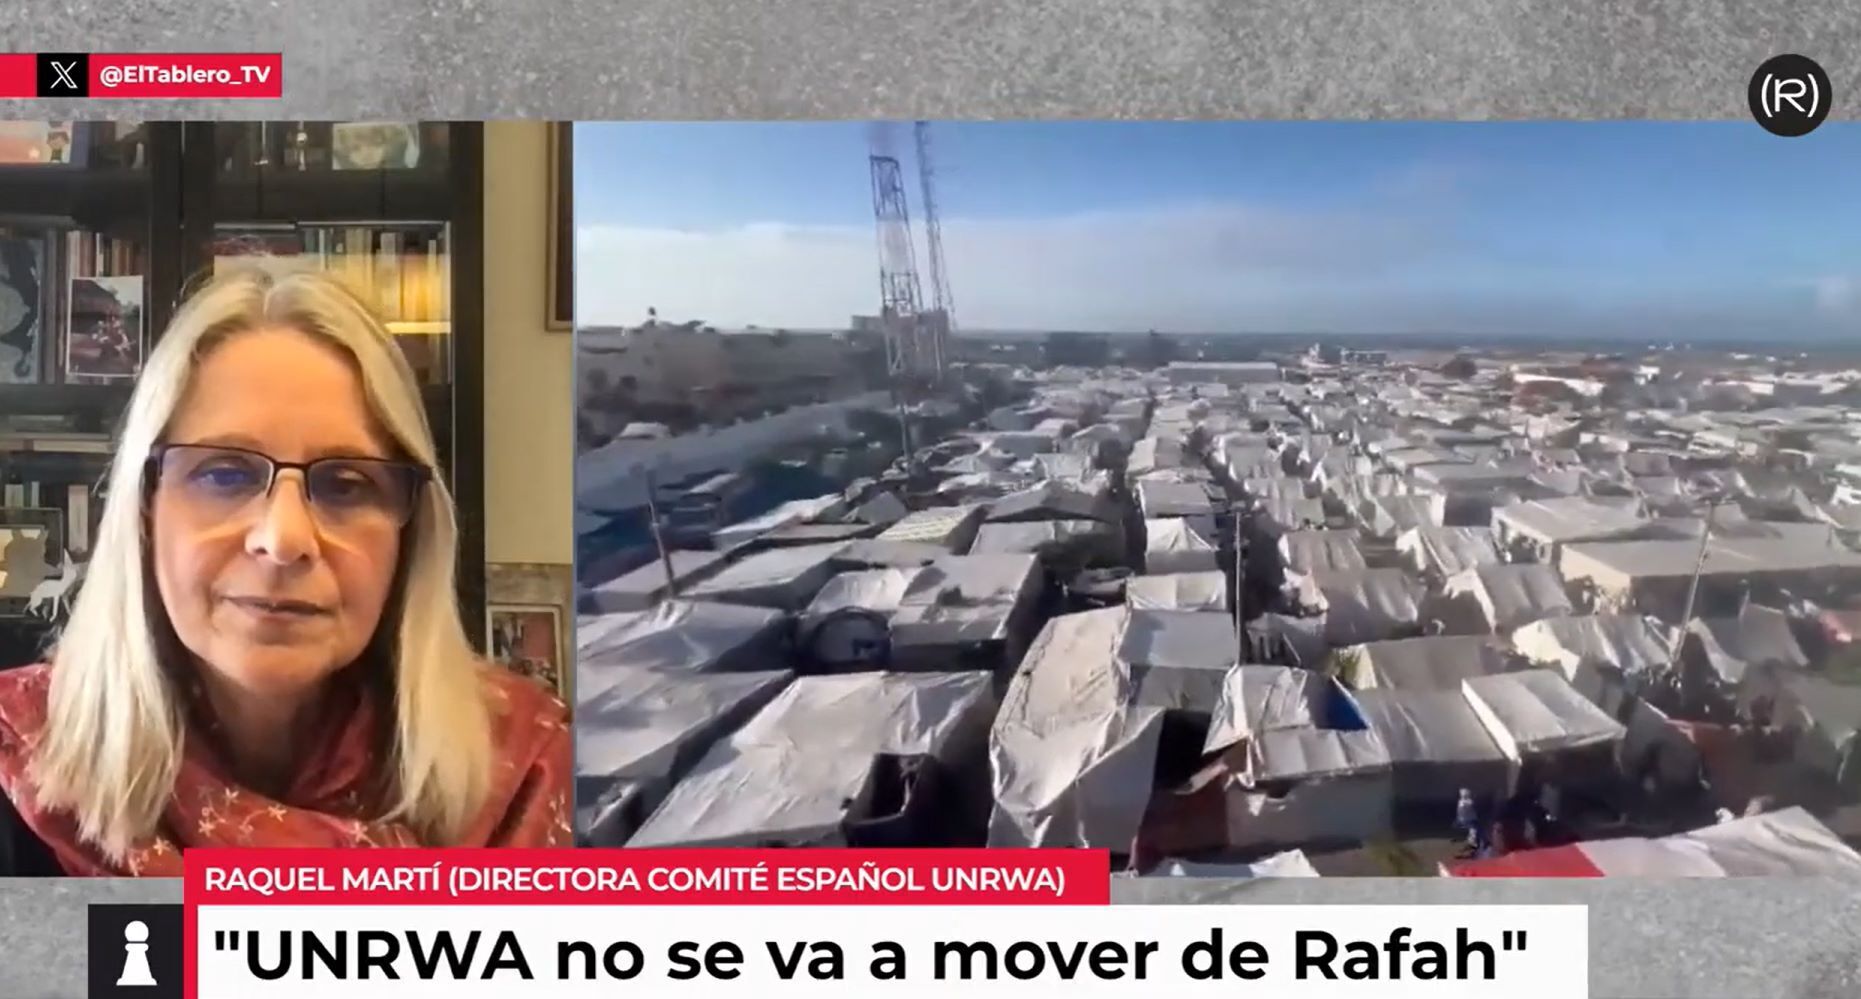 Raquel Martí: “No nos vamos a mover de Rafah”